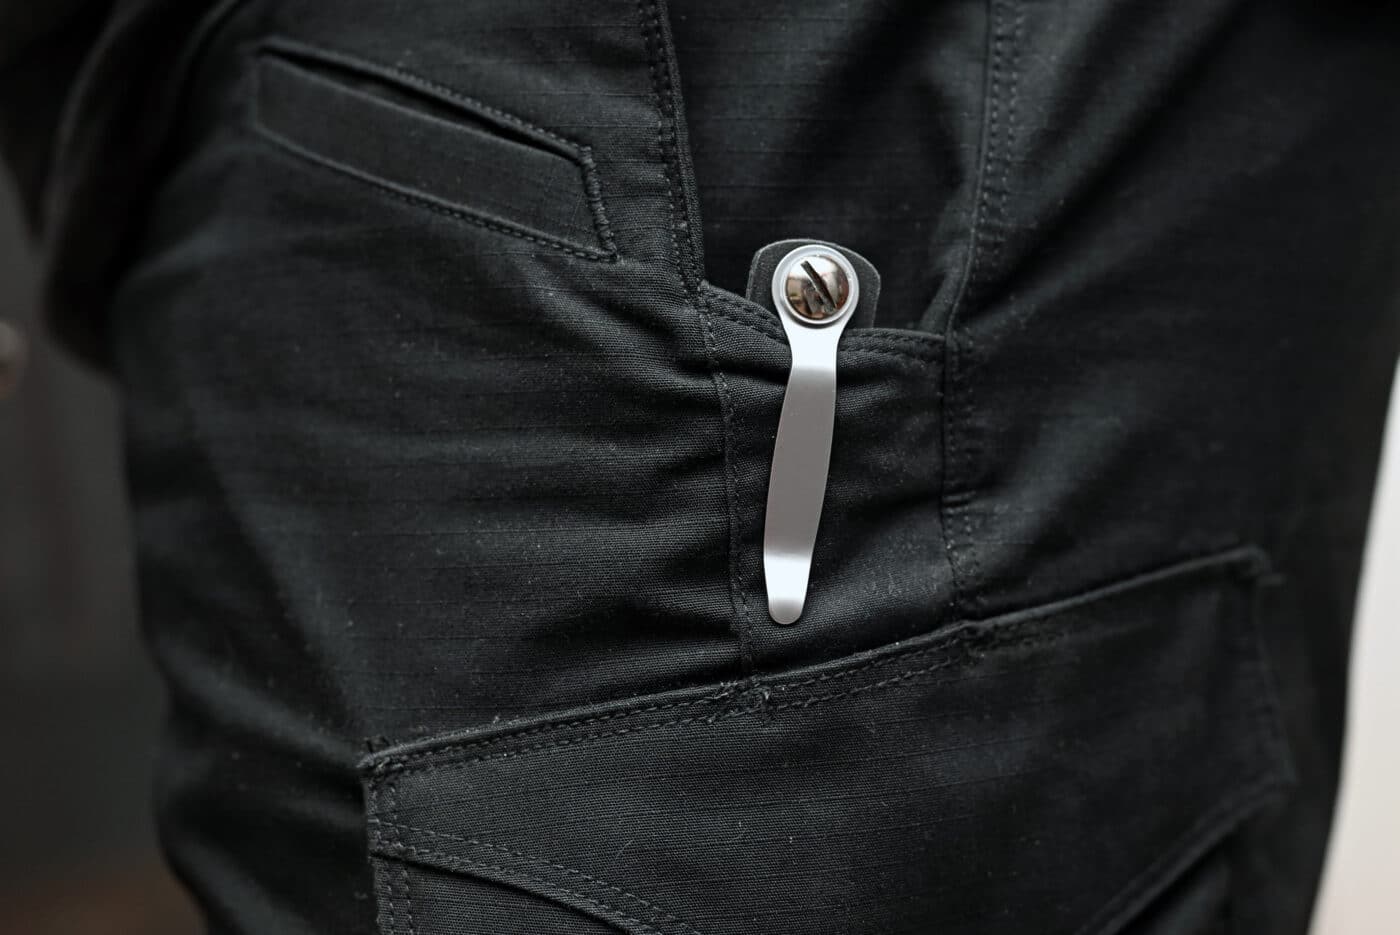 Pocket clip on mag holder